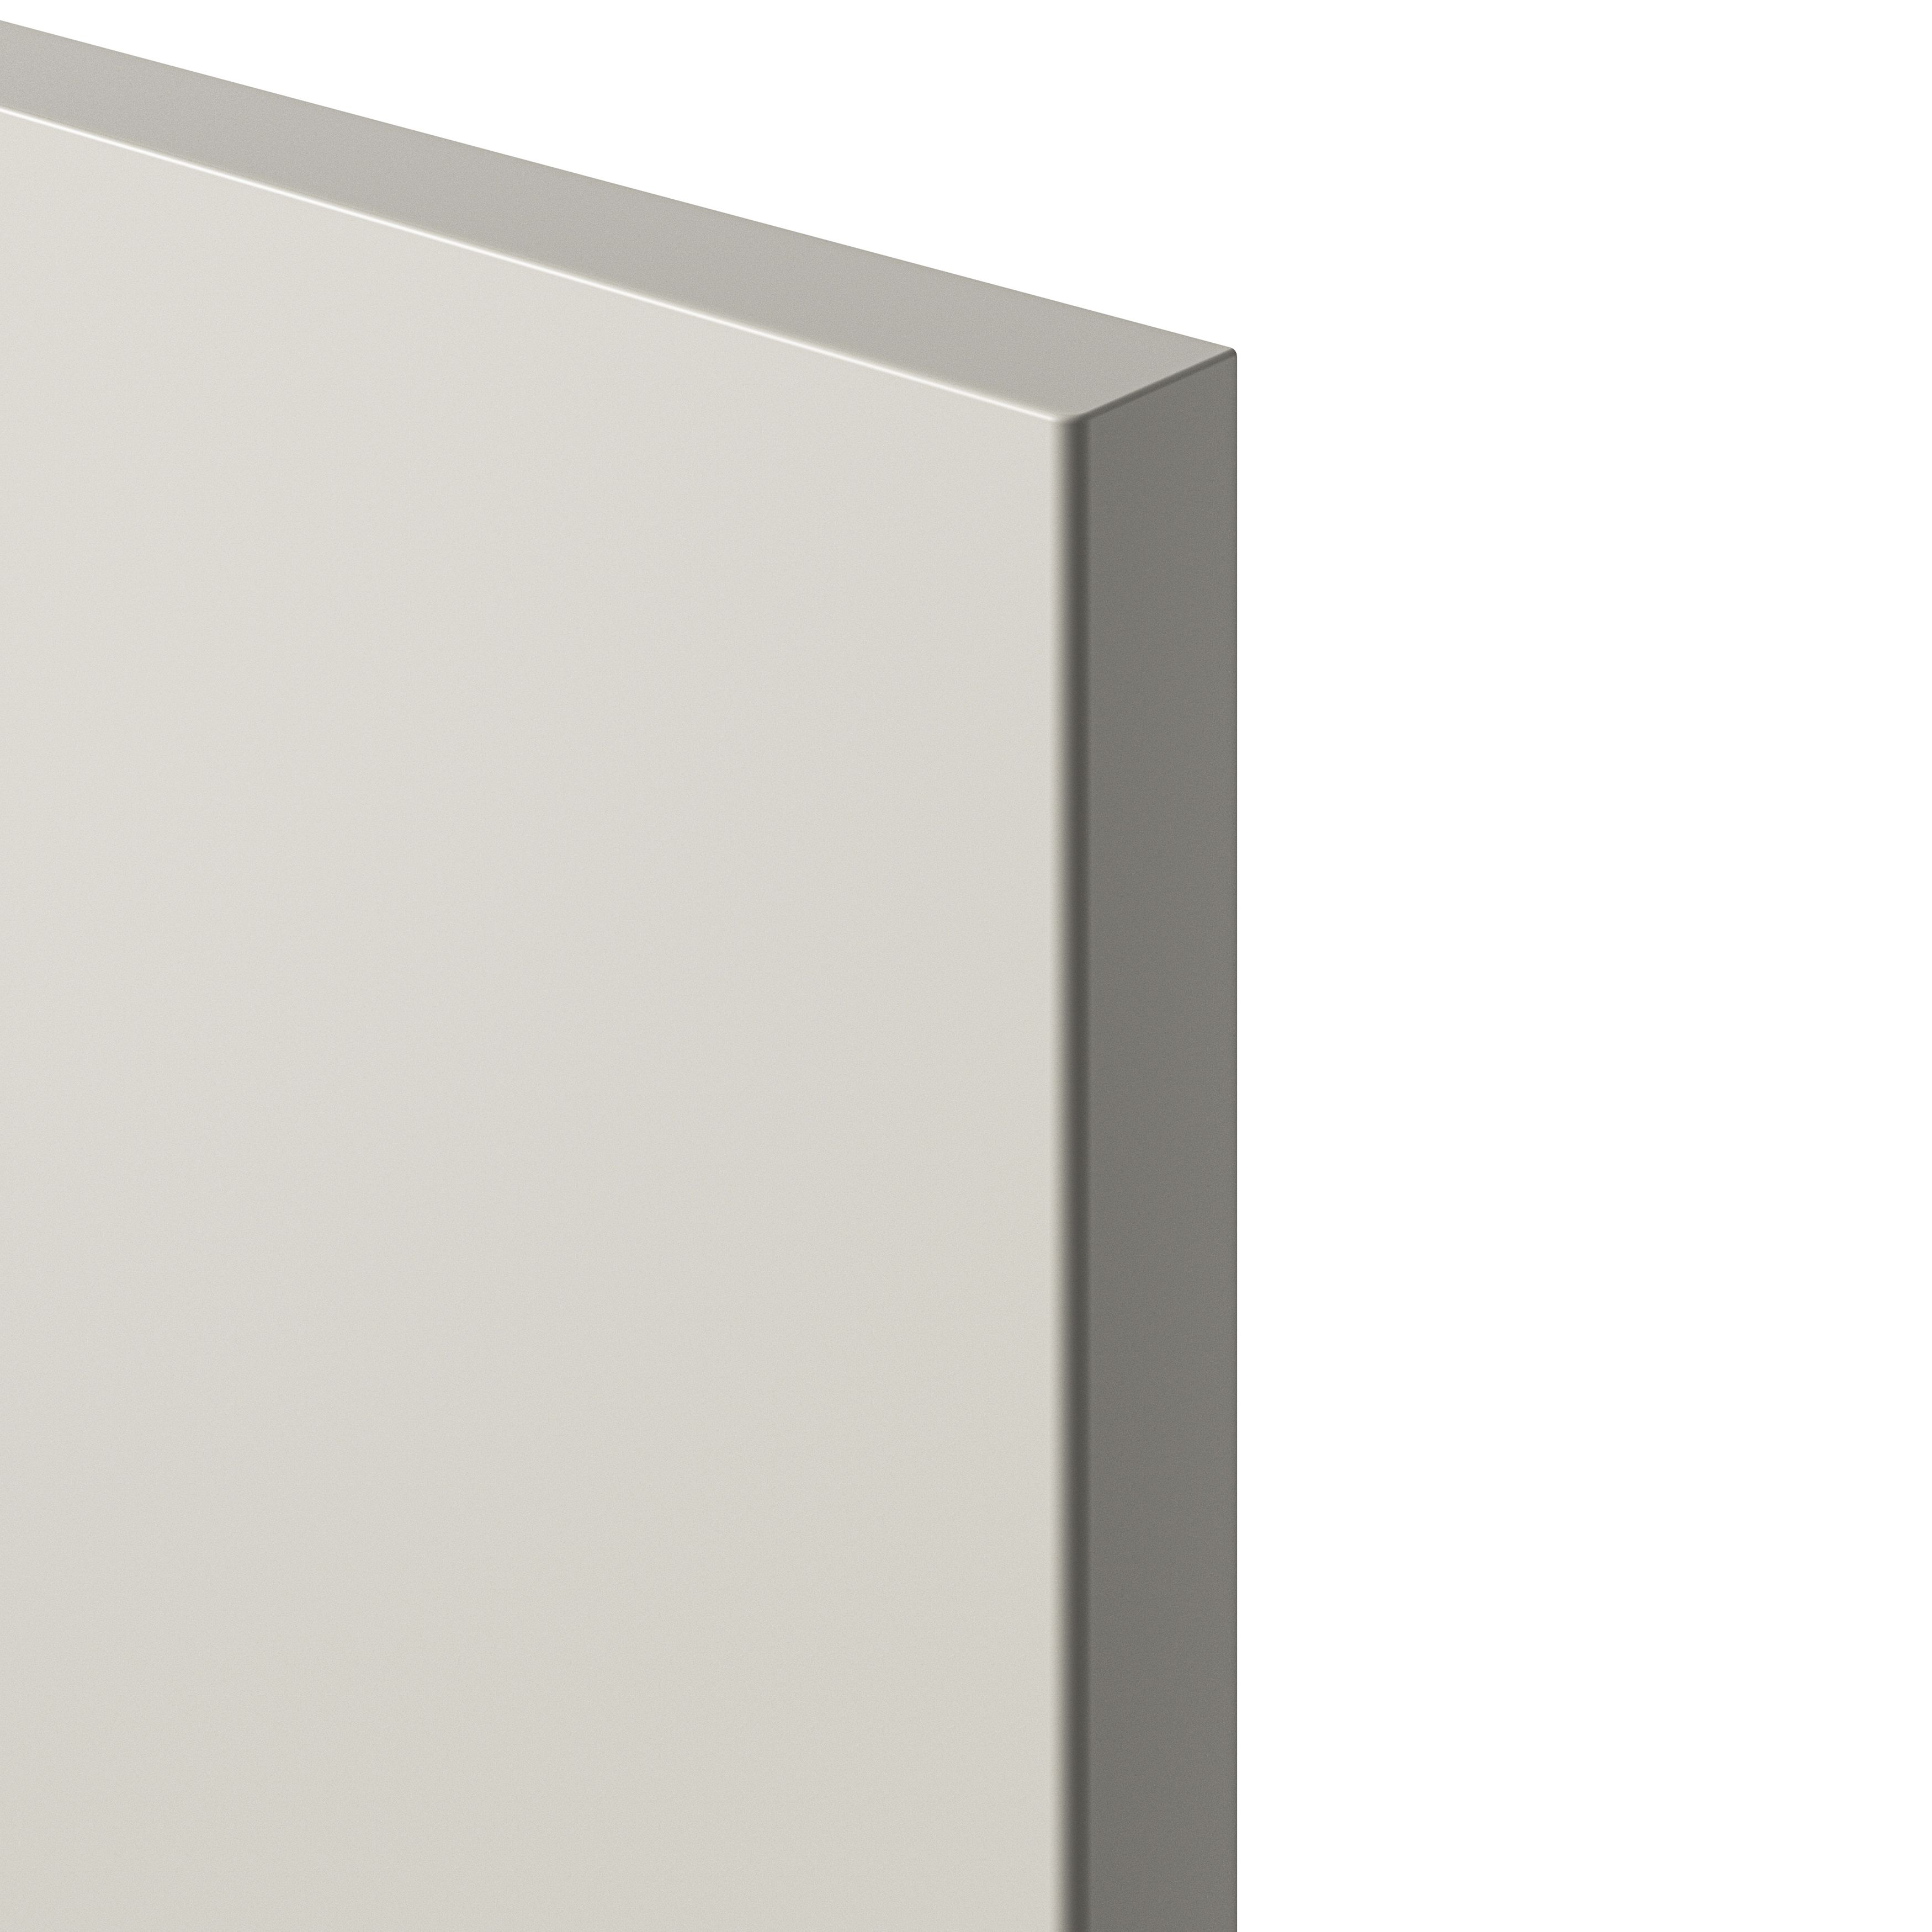 GoodHome Stevia Matt sandstone slab Highline Cabinet door (W)250mm (H)715mm (T)18mm